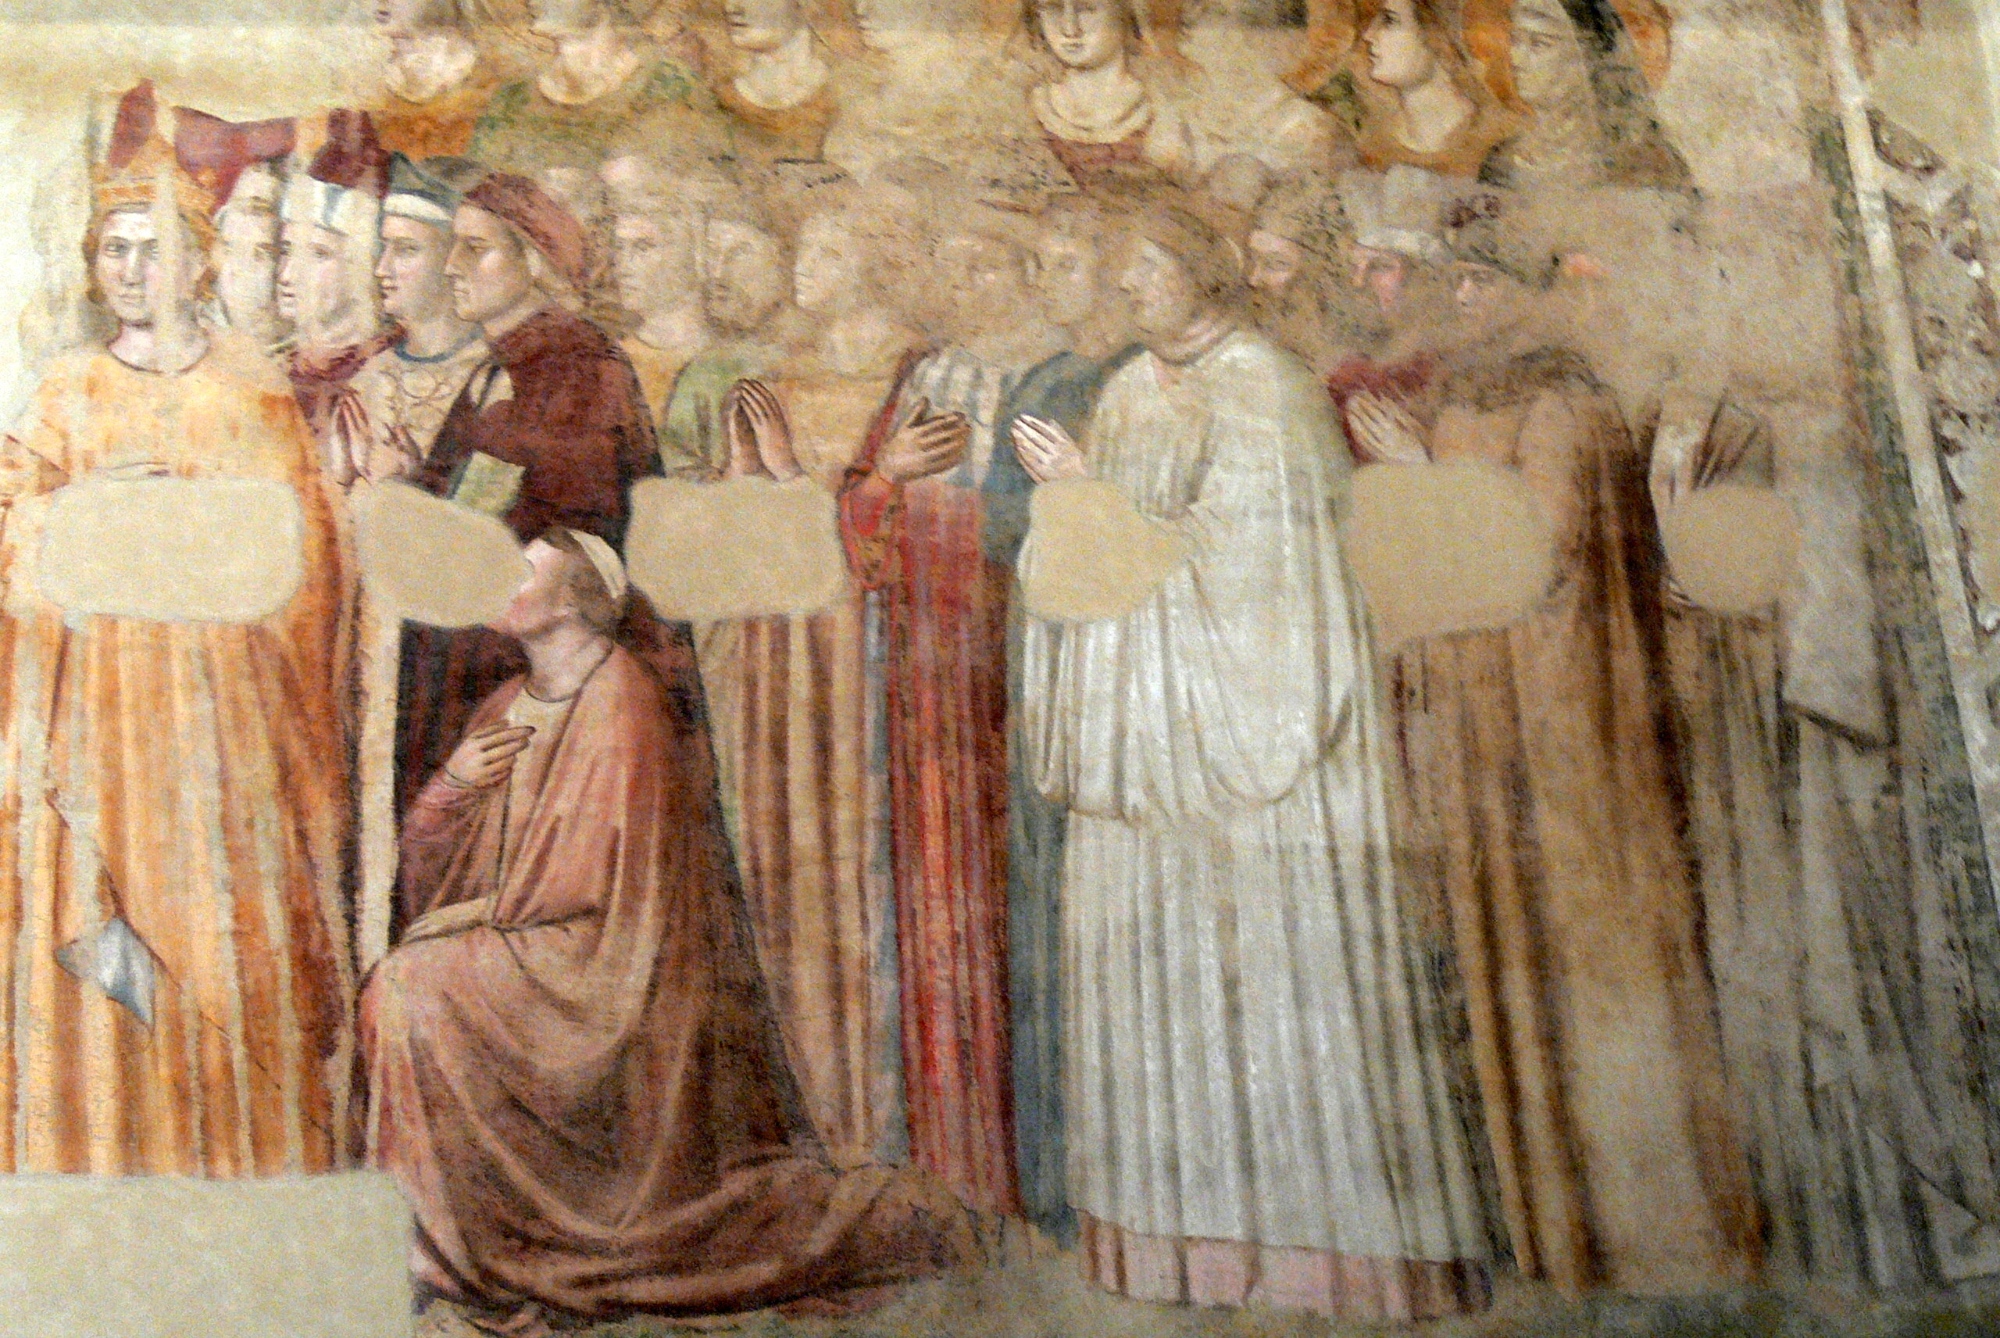 Podestà Chapel, Bargello Museum